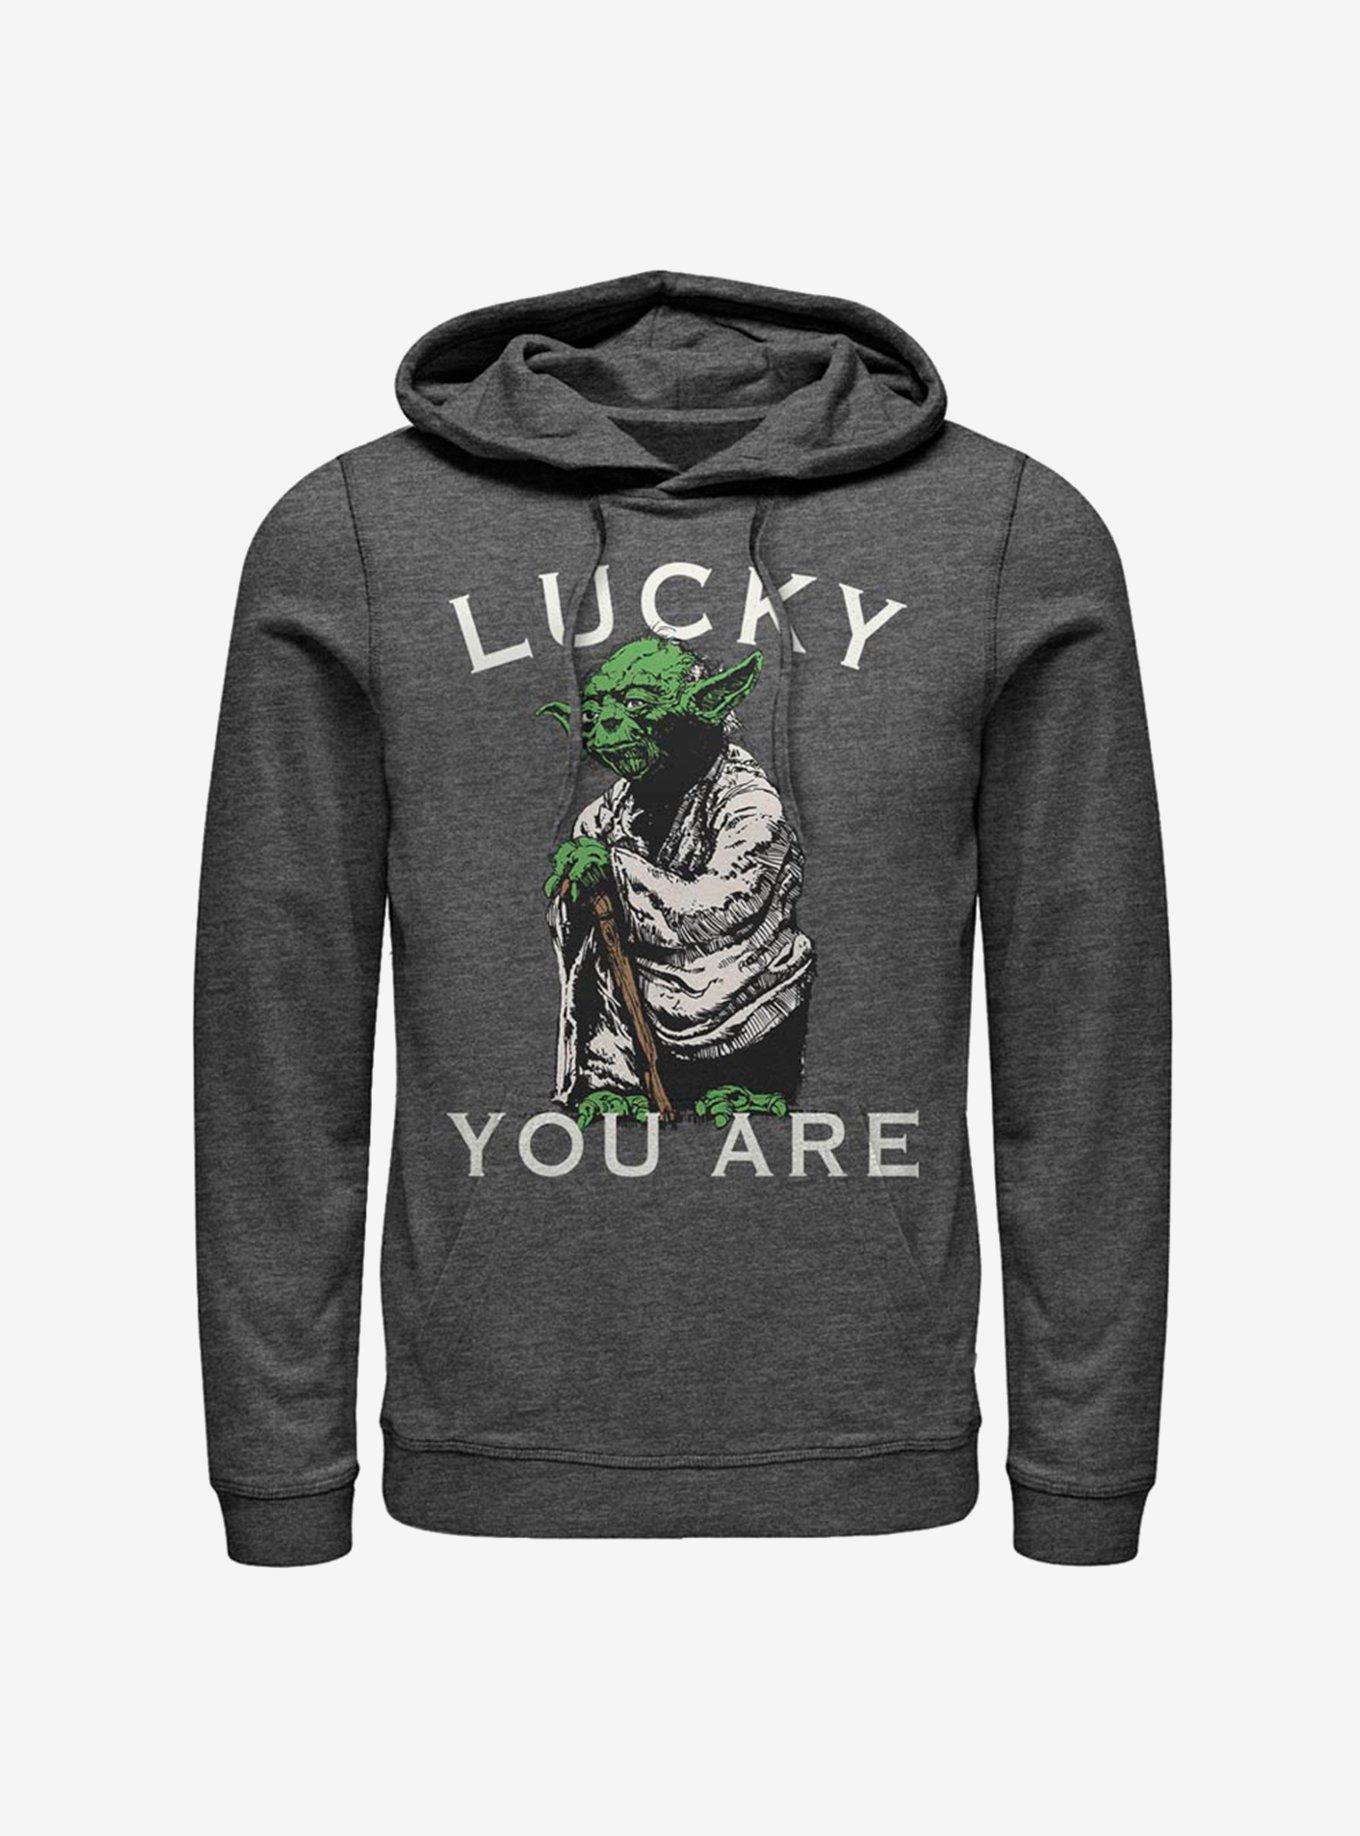 Star Wars Lucky Yoda  Hoodie, , hi-res